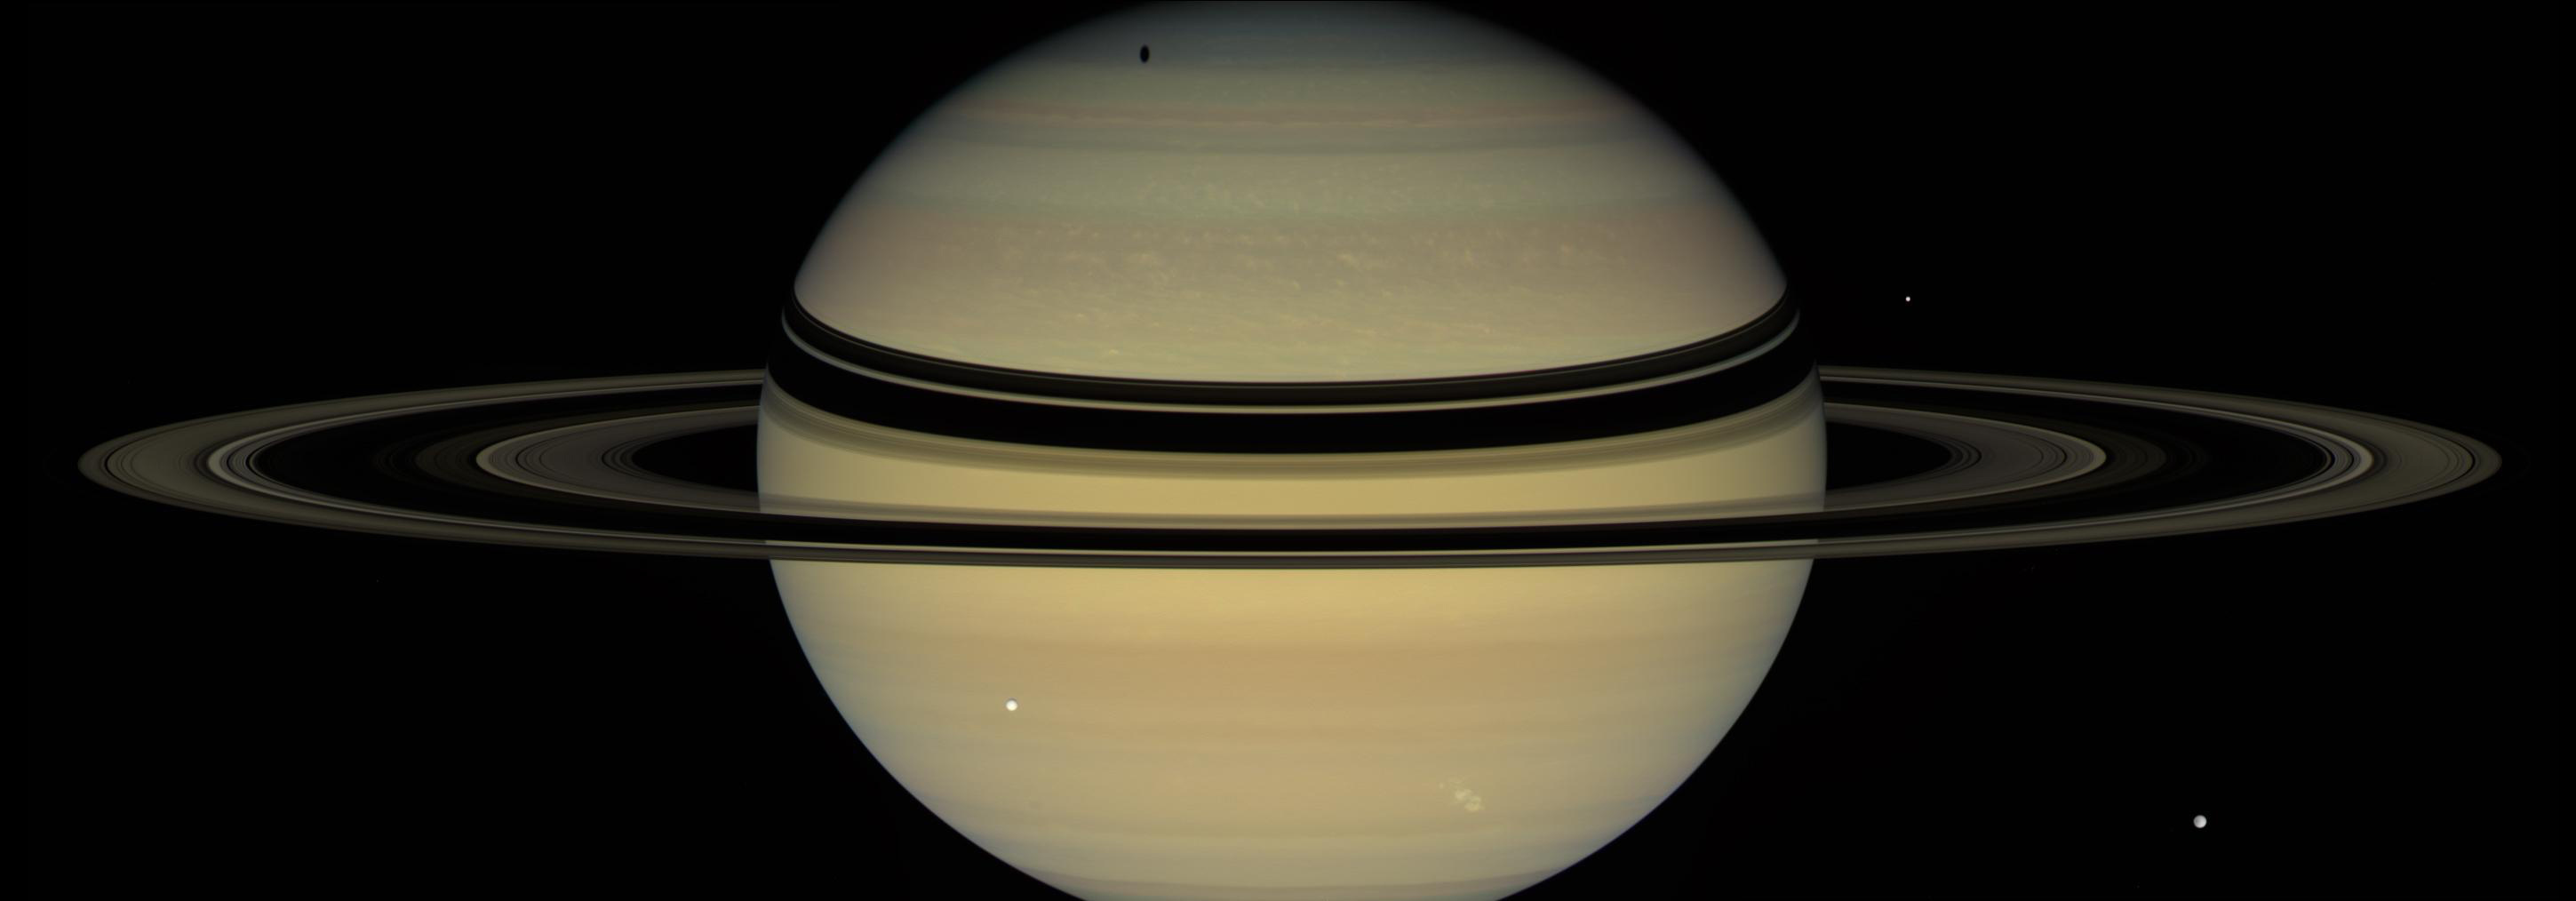 Saturn in all its splendor